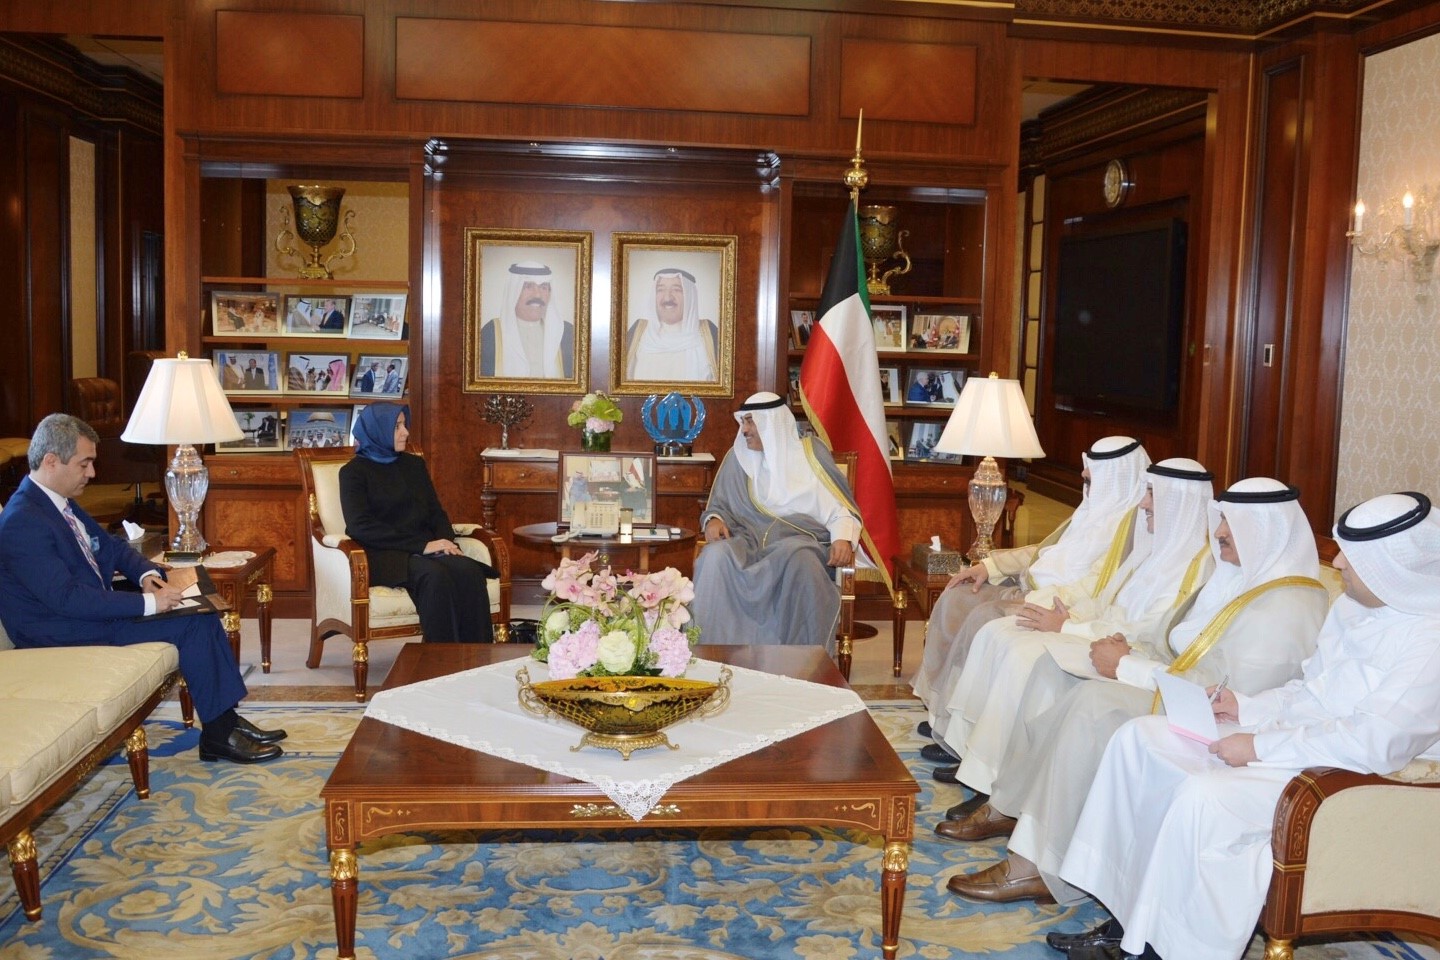 Kuwaiti First Deputy Prime Minister and Foreign Minister Sheikh Sabah Al-Khaled Al-Hamad Al-Sabah received the credentials of Turkey's new ambassador to Kuwait Ayse Hilal Sayan Koytak